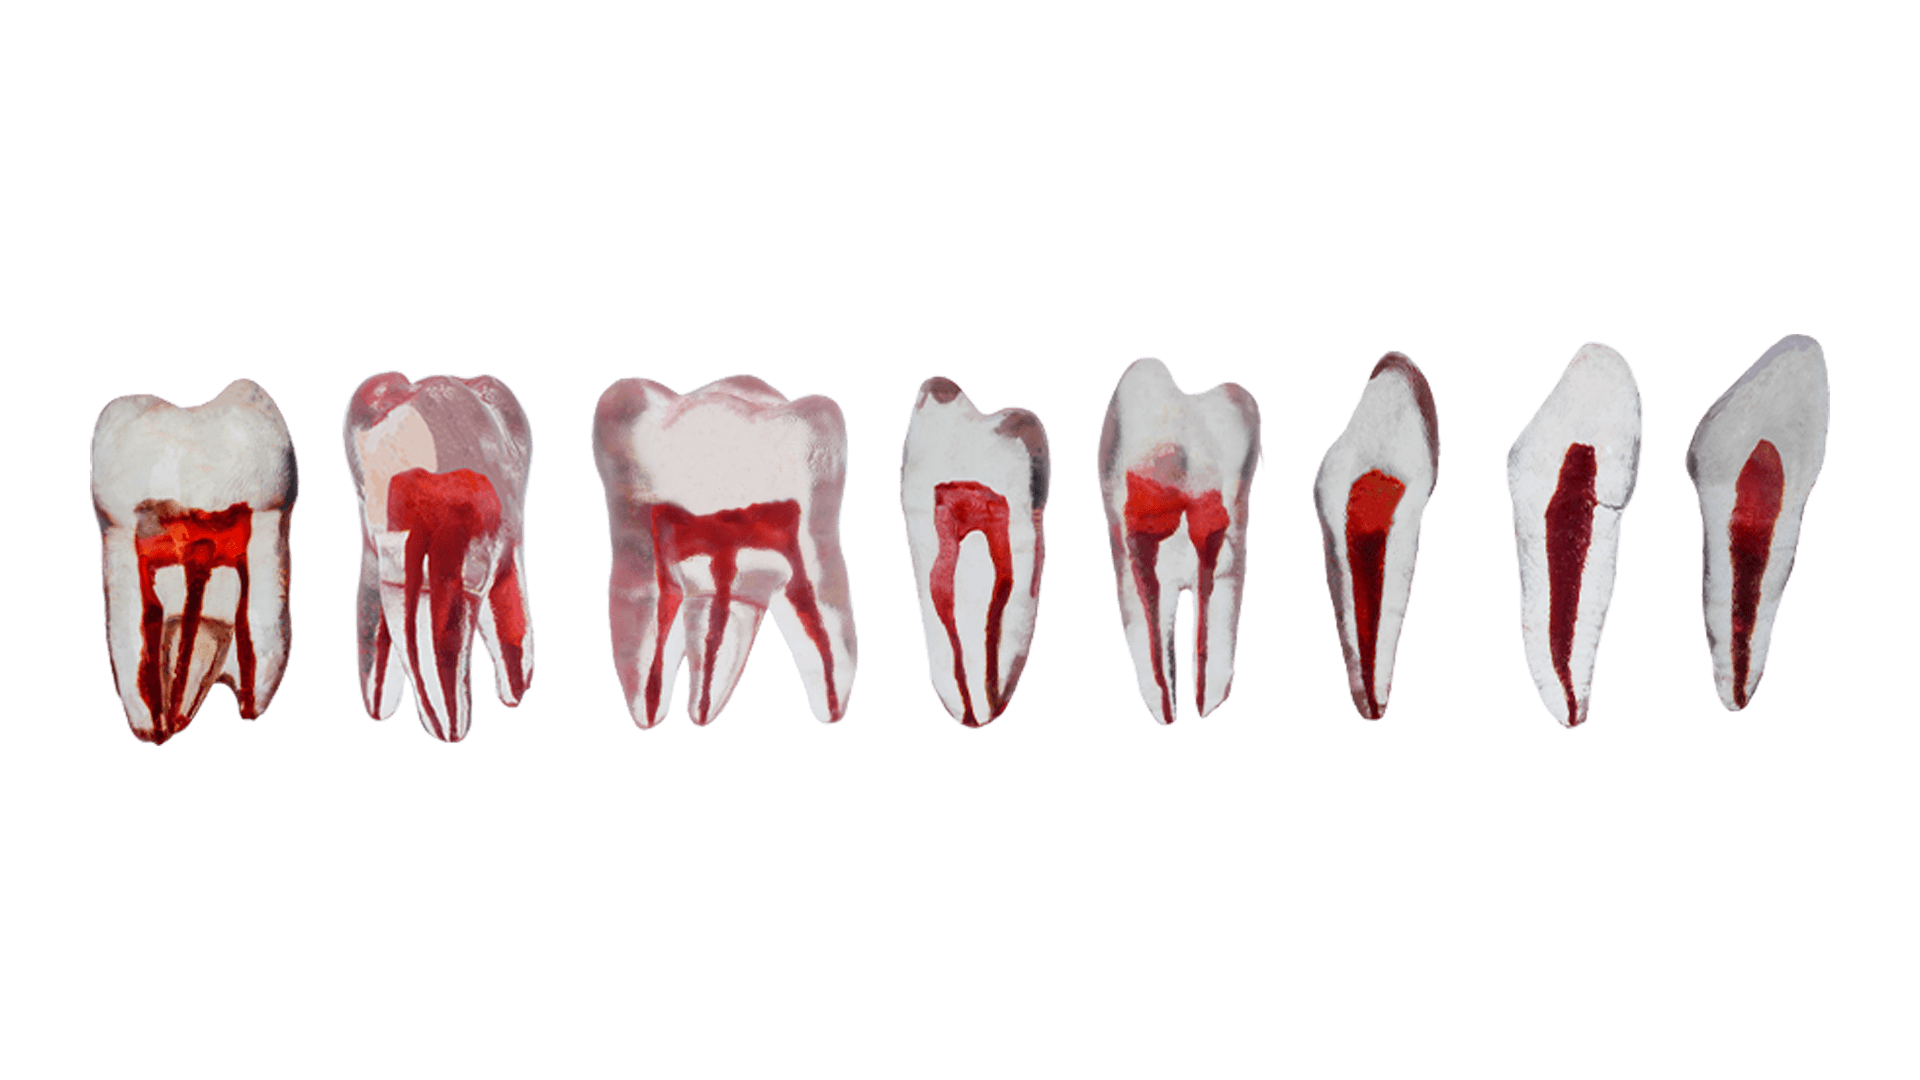 Maxillary Teeth - Transparent Models